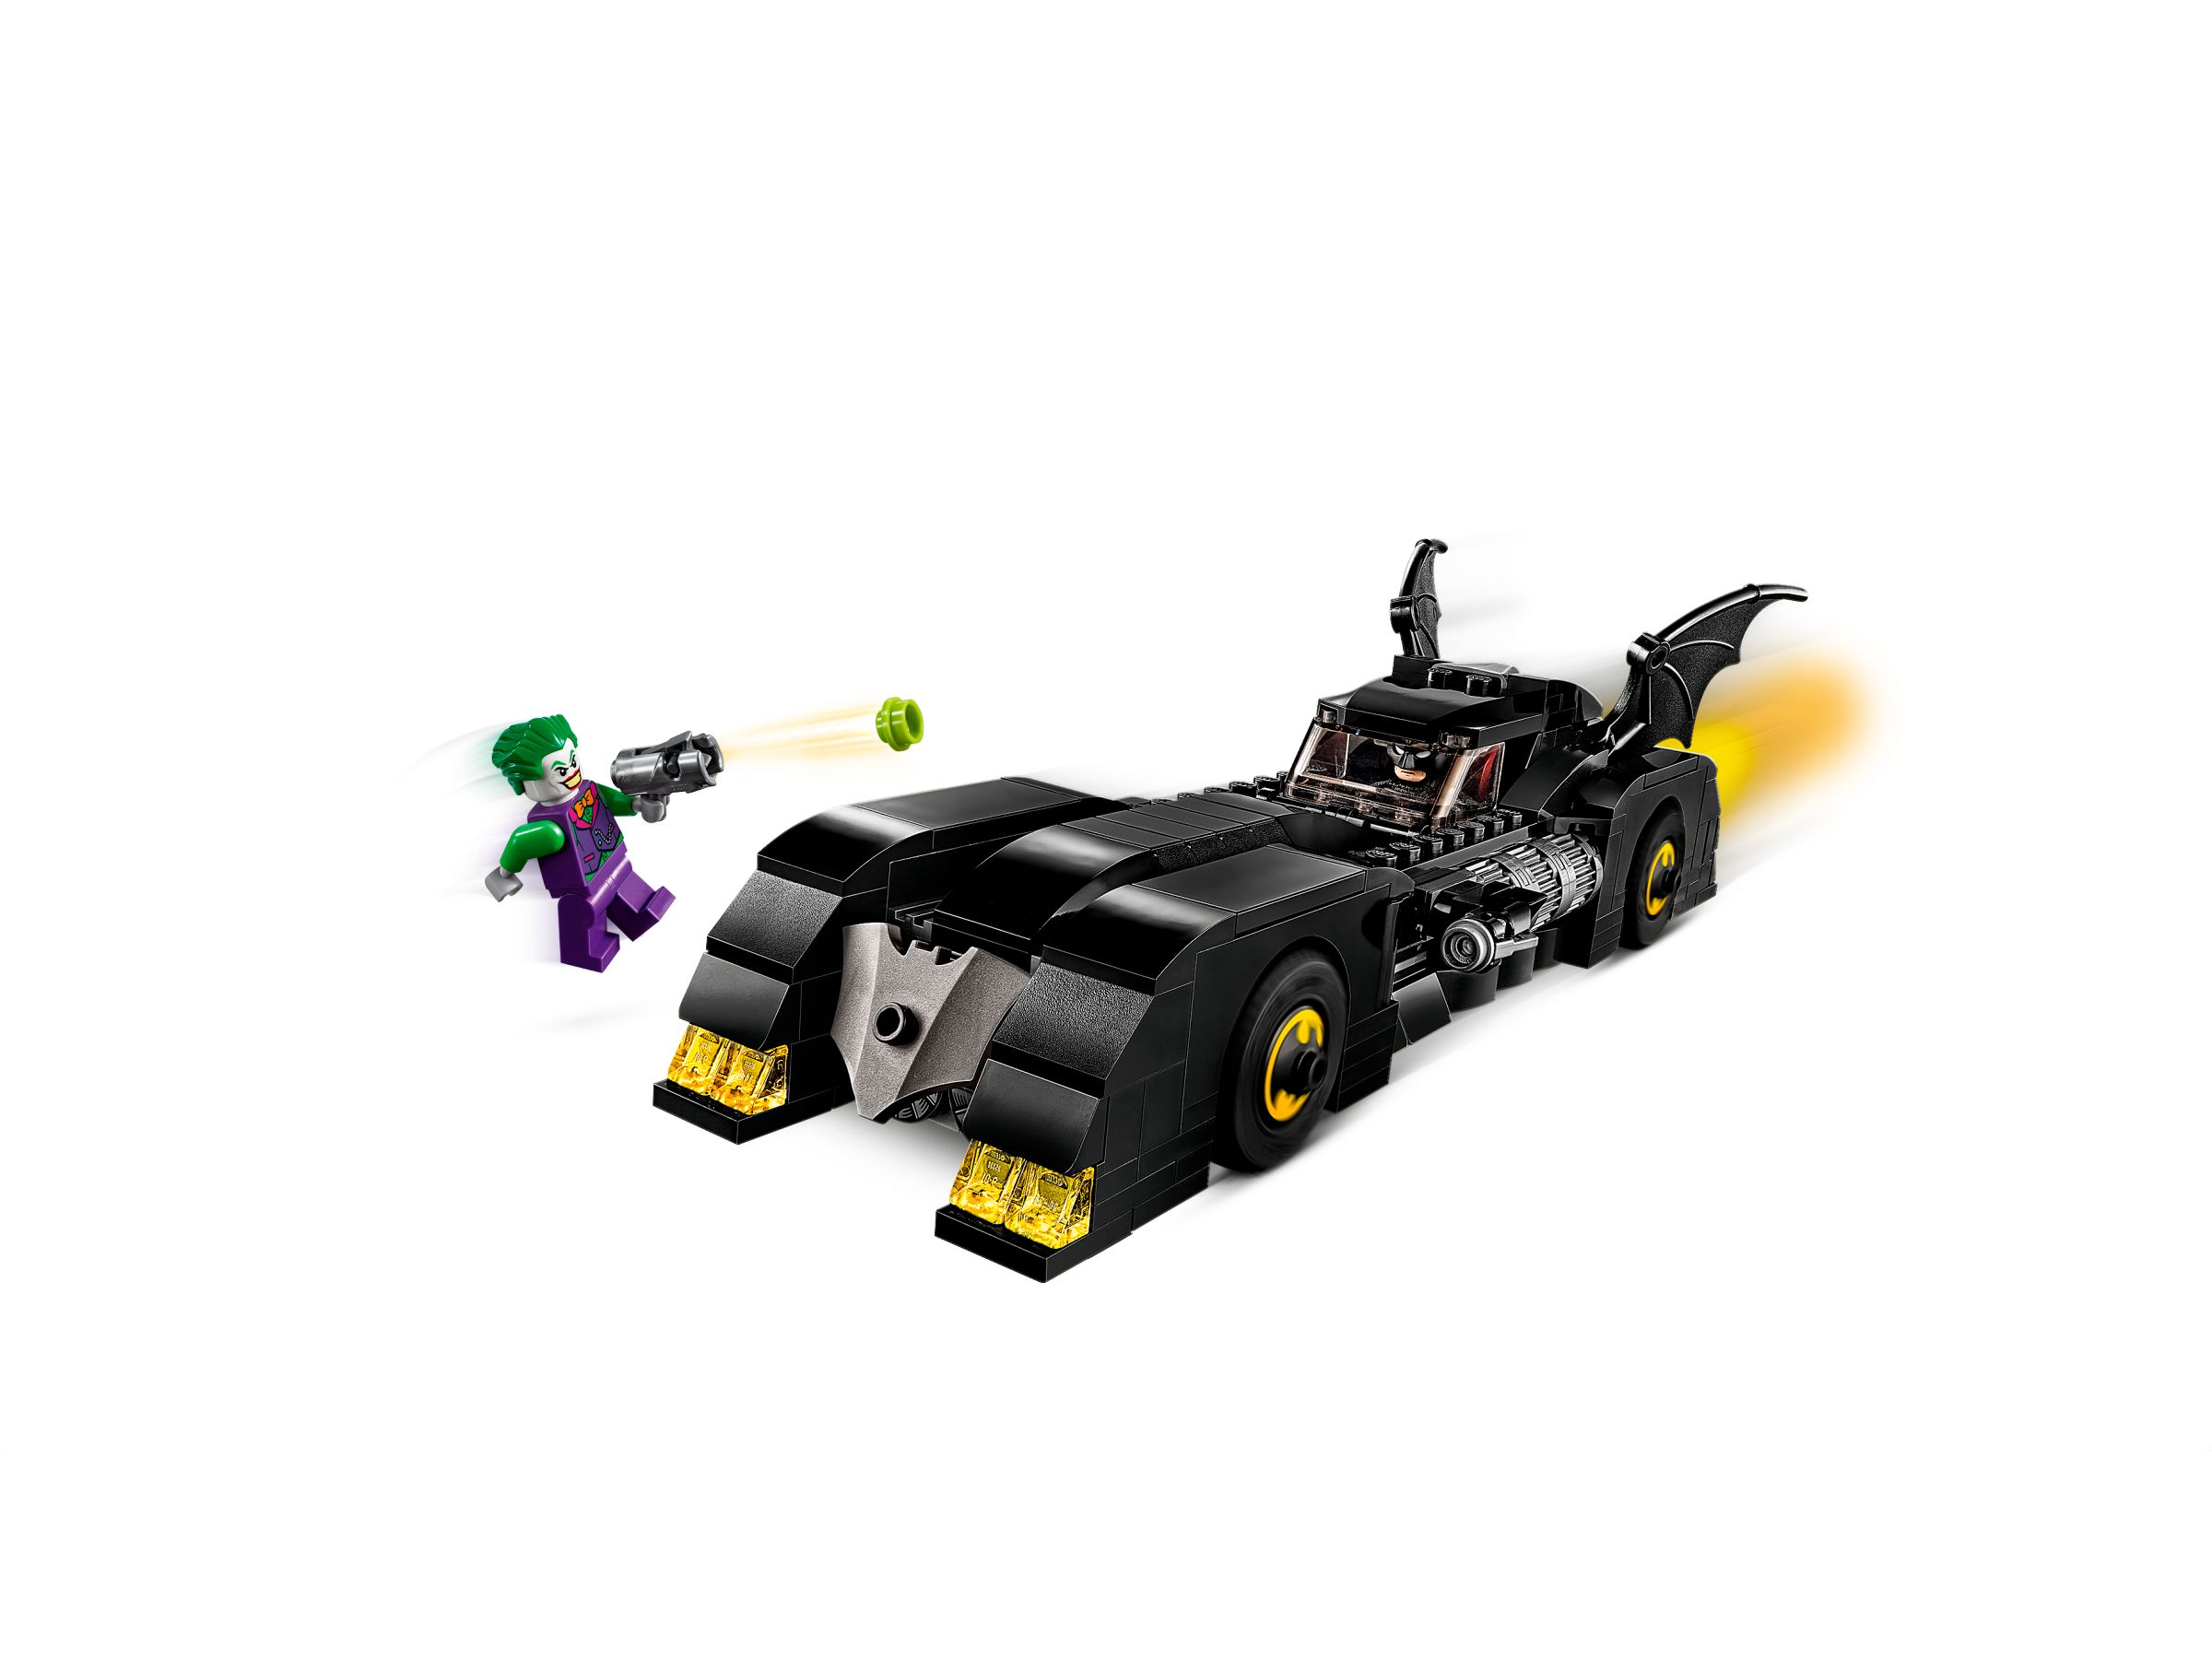 LEGO Super Heroes 76119 Batmobile™: Verfolgungsjagd mit dem Joker™ LEGO_76119_alt2.jpg